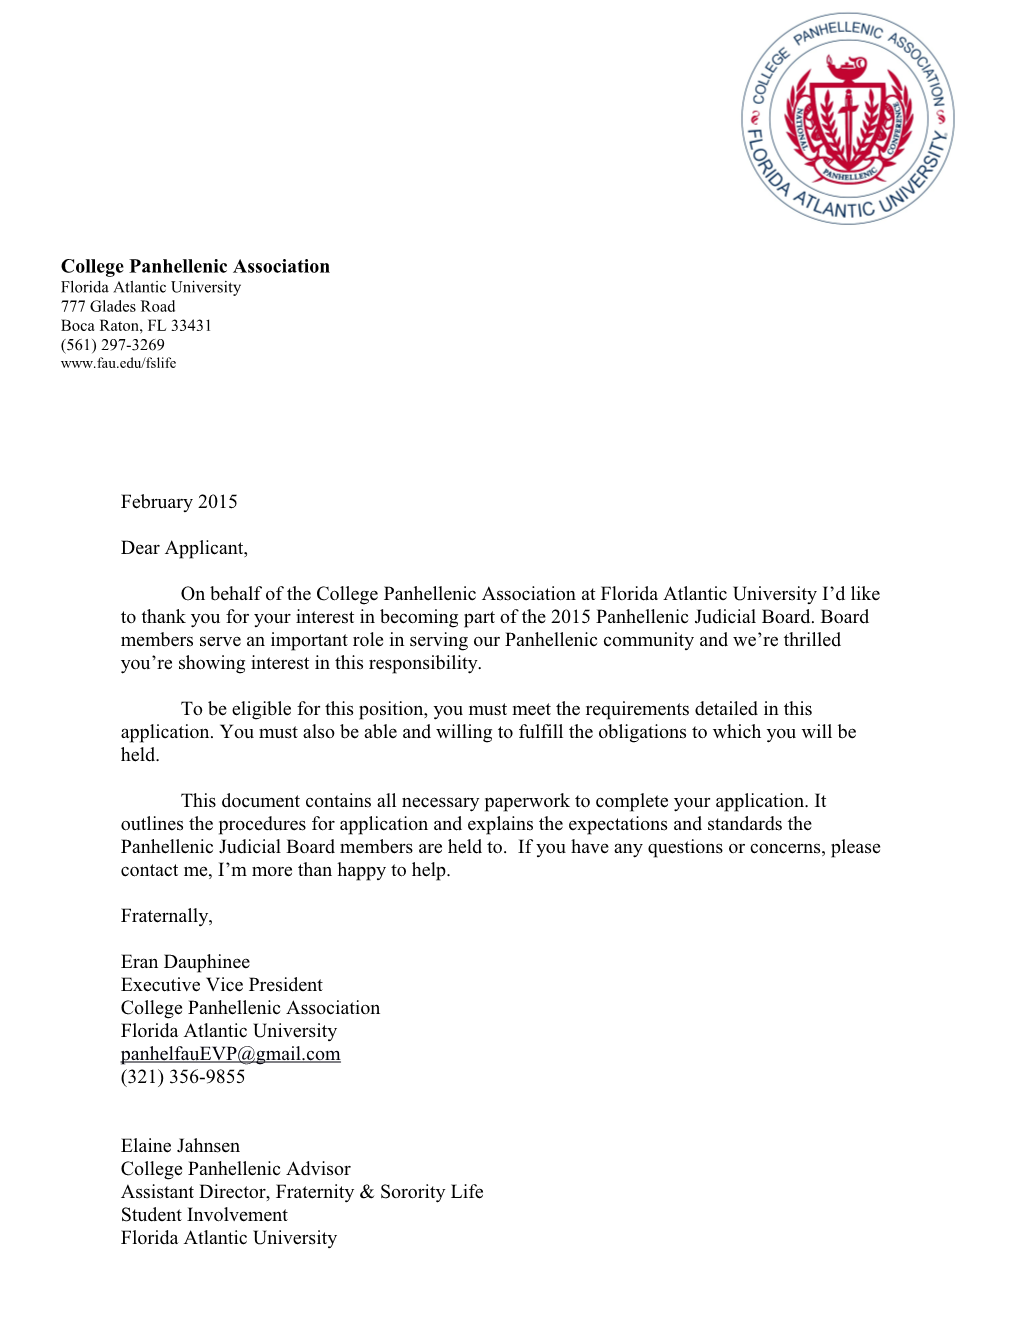 College Panhellenic Association2015judicial Board Application